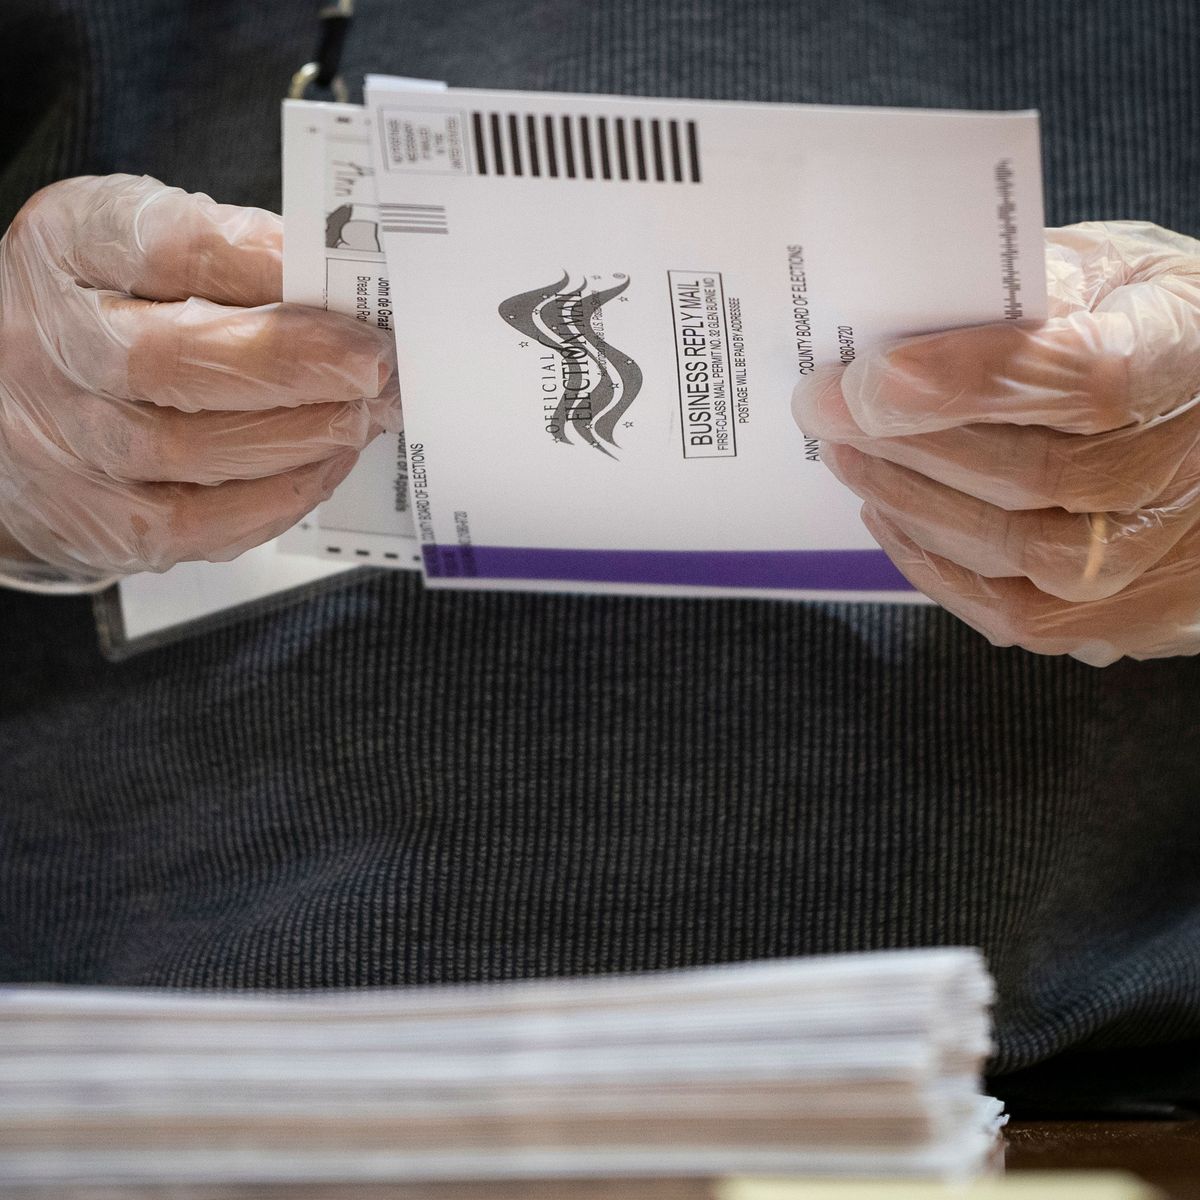 Ocasio Cortez Voting Record